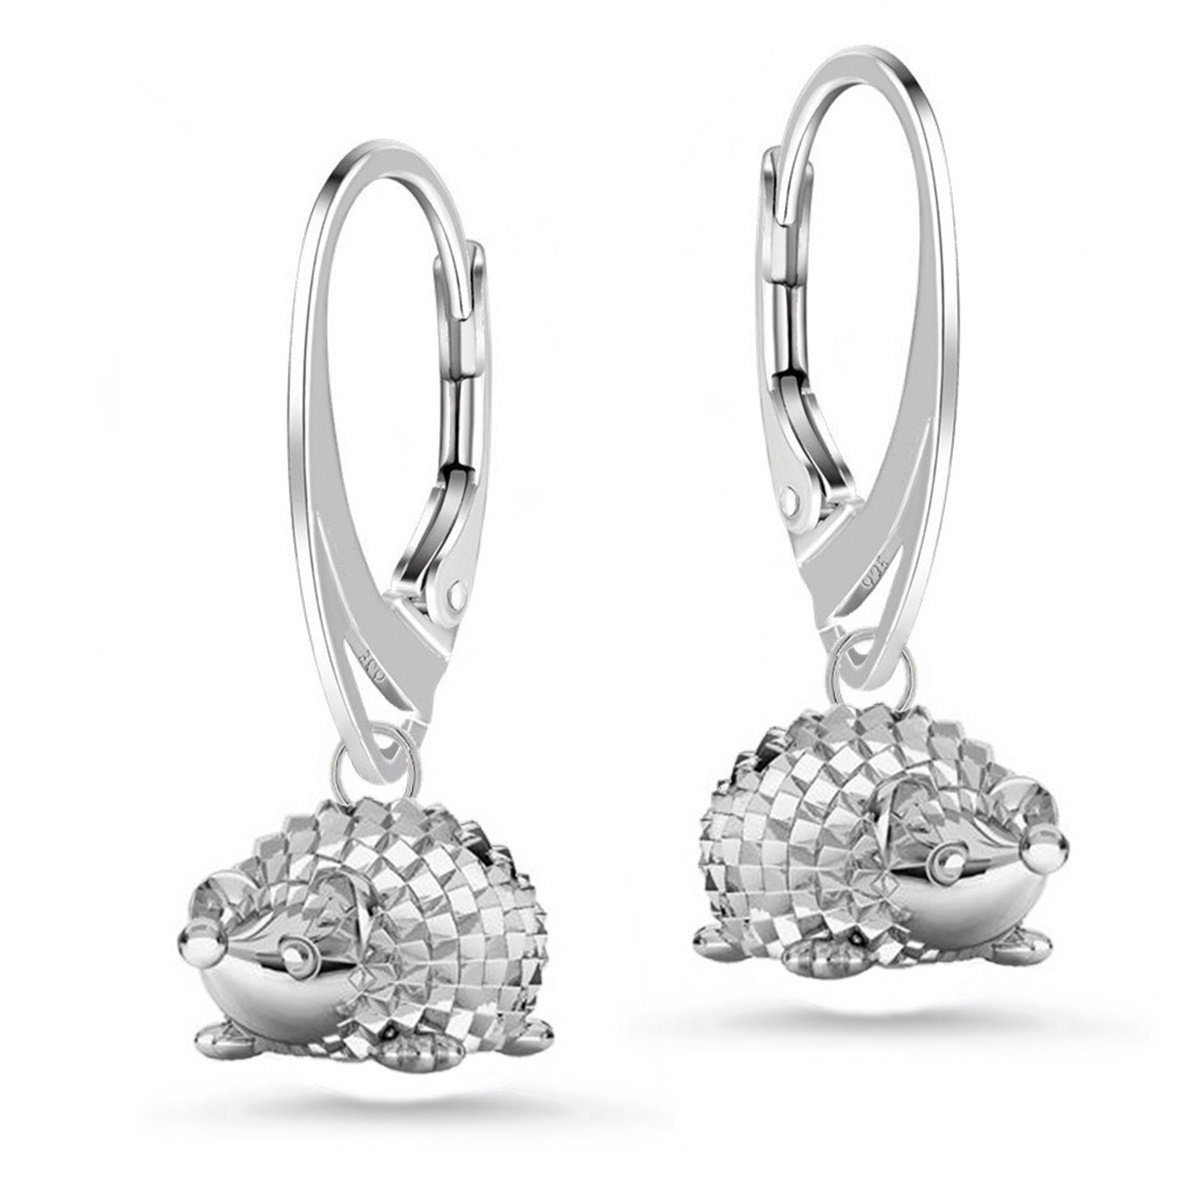 Goldene Hufeisen Paar Ohrhänger Mini Igel Ohrringe aus 925 Sterling Silber  Hängeohrringe (1 Paar, inkl. etui), Silberschmuck Damen, Mädchen